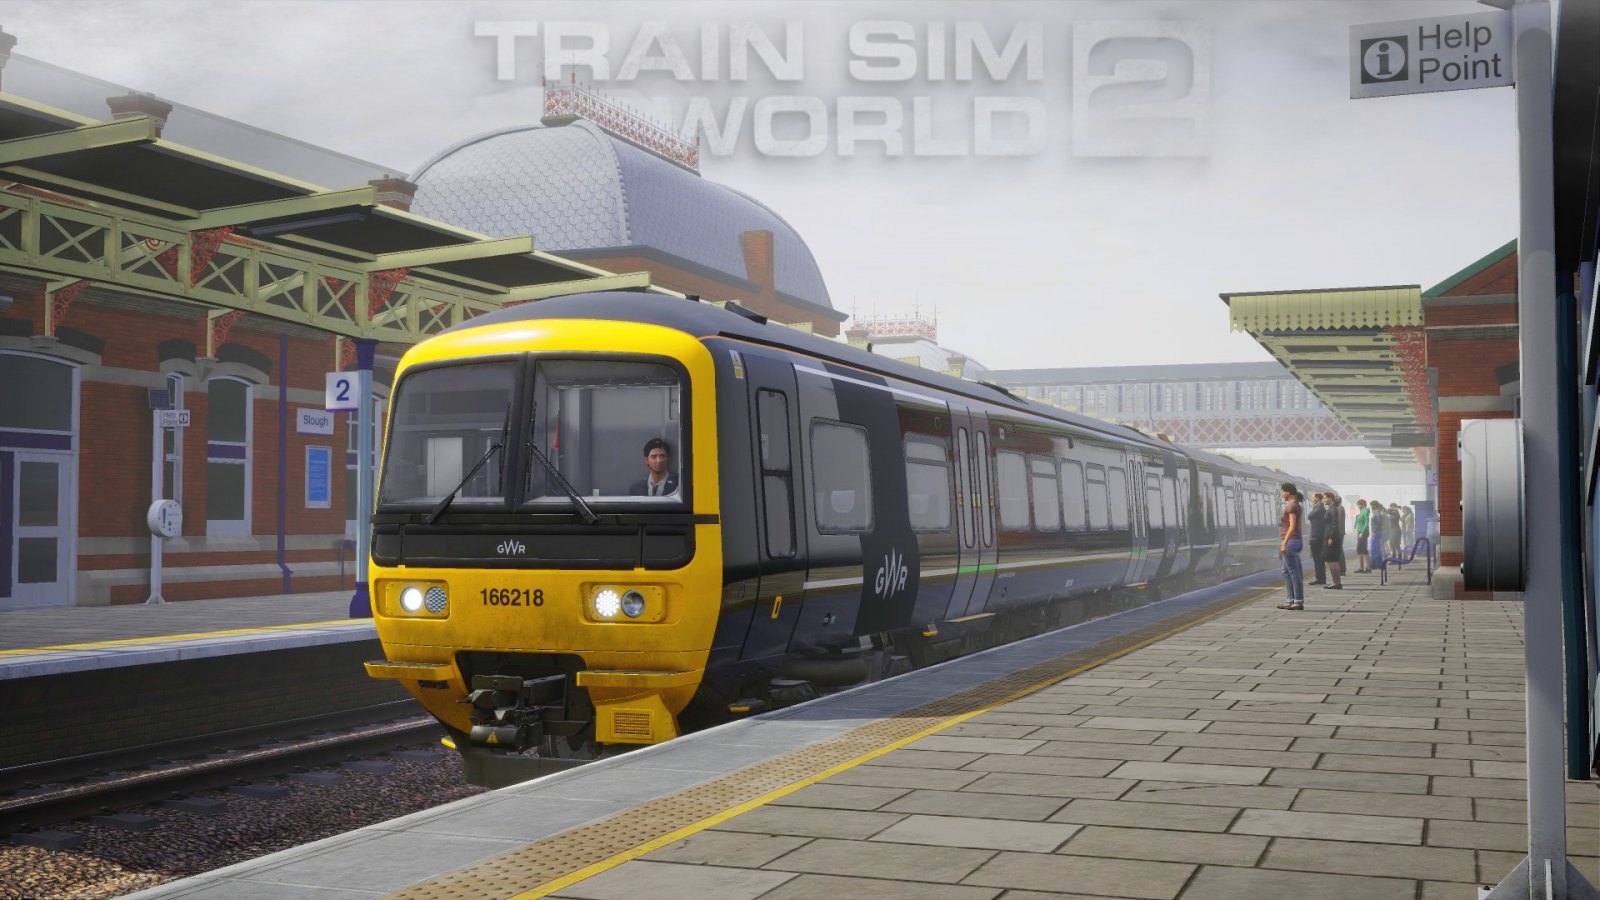 Class 166 TSW 2 - Train Sim World 2